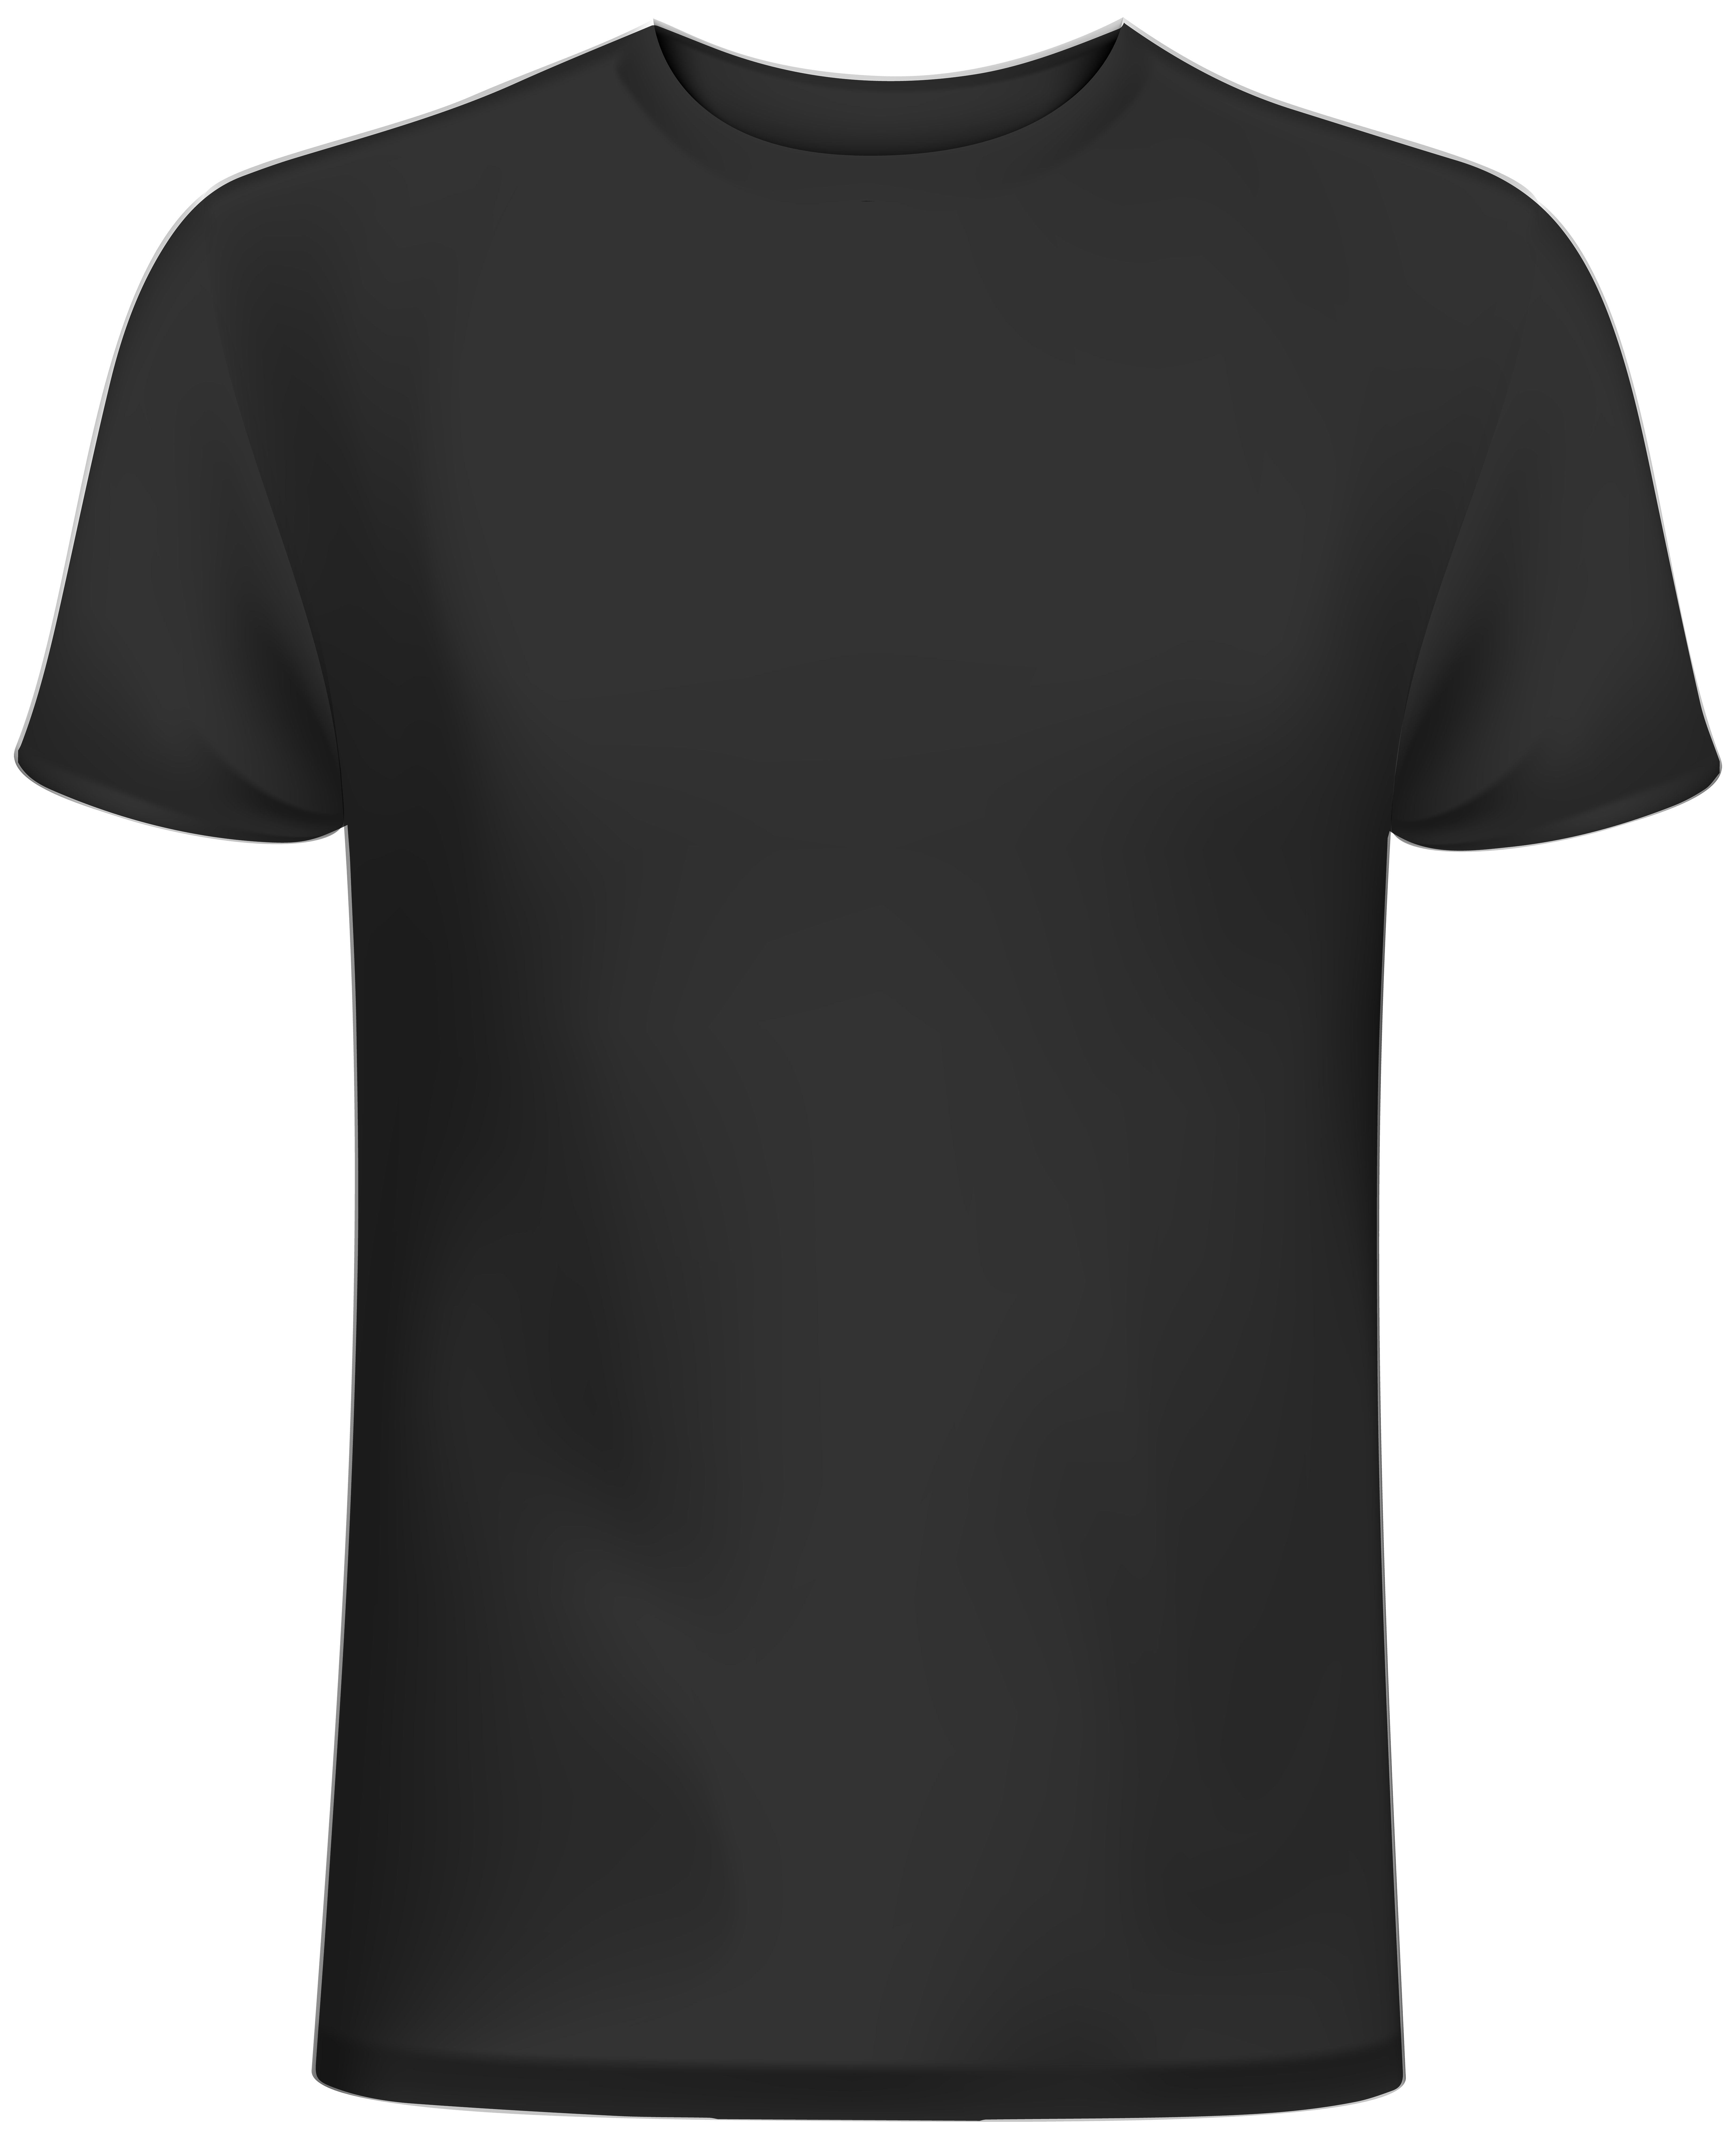 high-resolution-t-shirt-black-png-ghana-tips